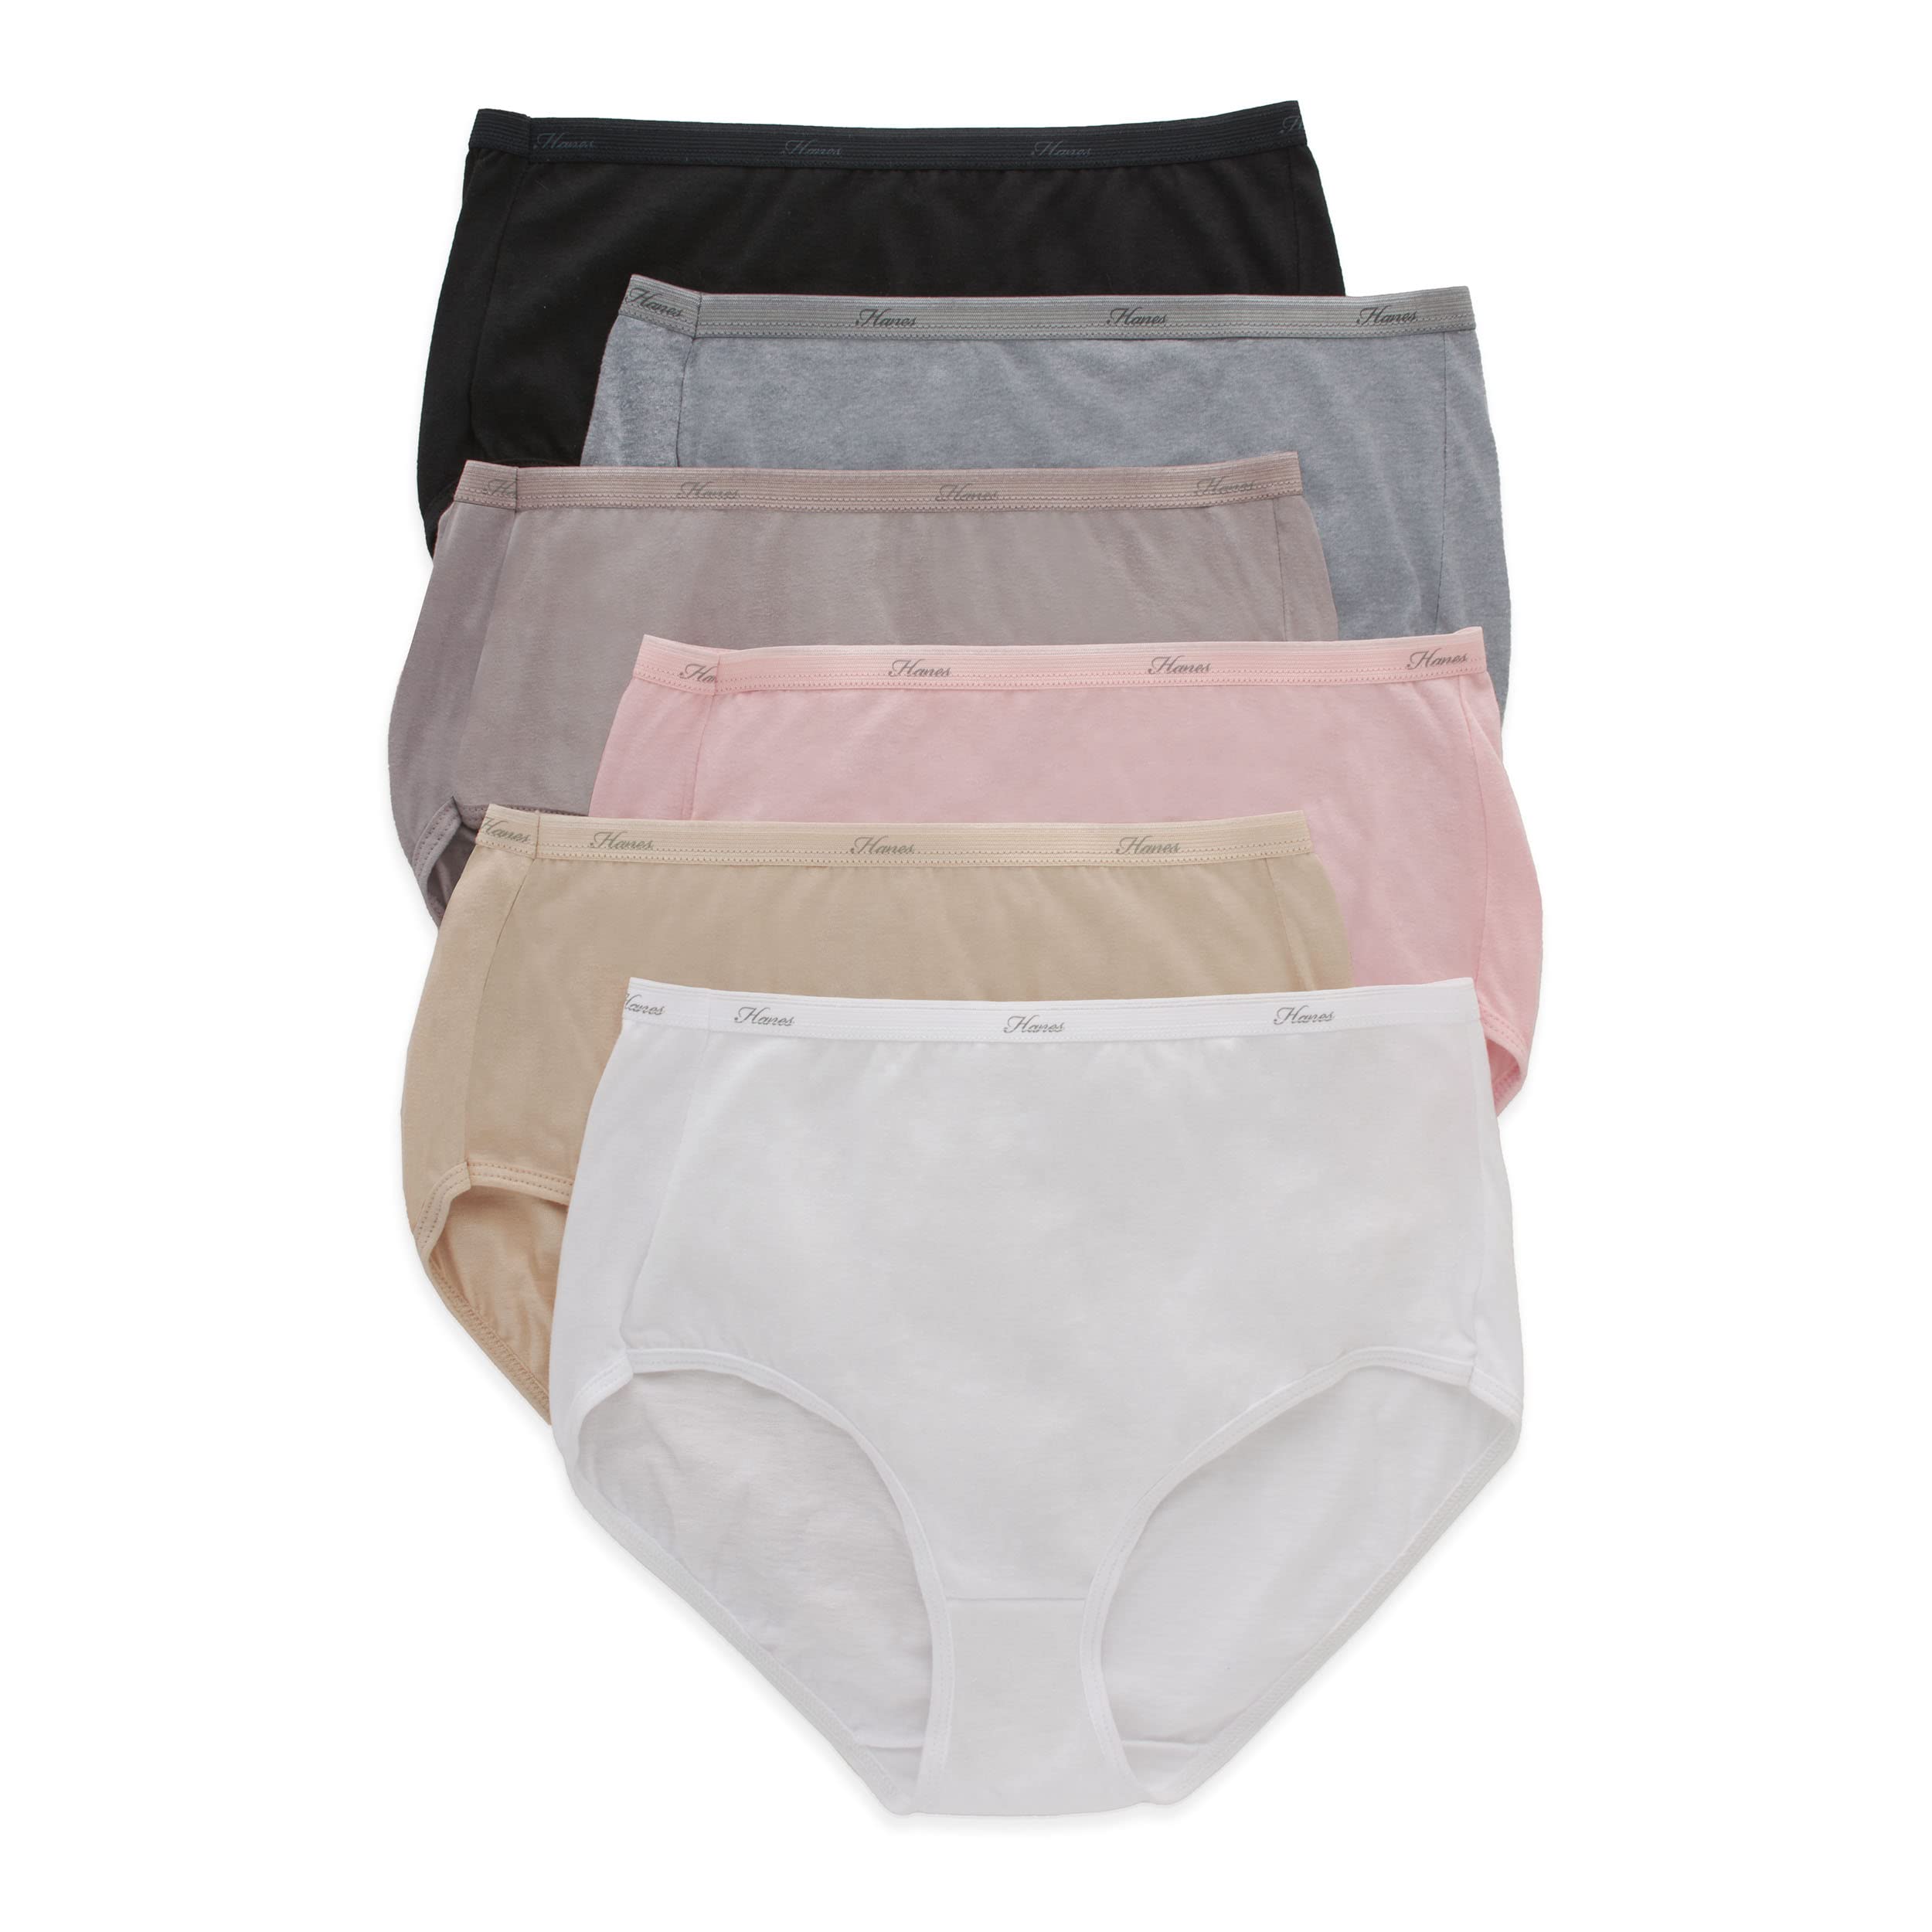 Hanes Womens Plus Size Panties Pack, Classic Cotton Brief Underwear,  Moisture-Wicking